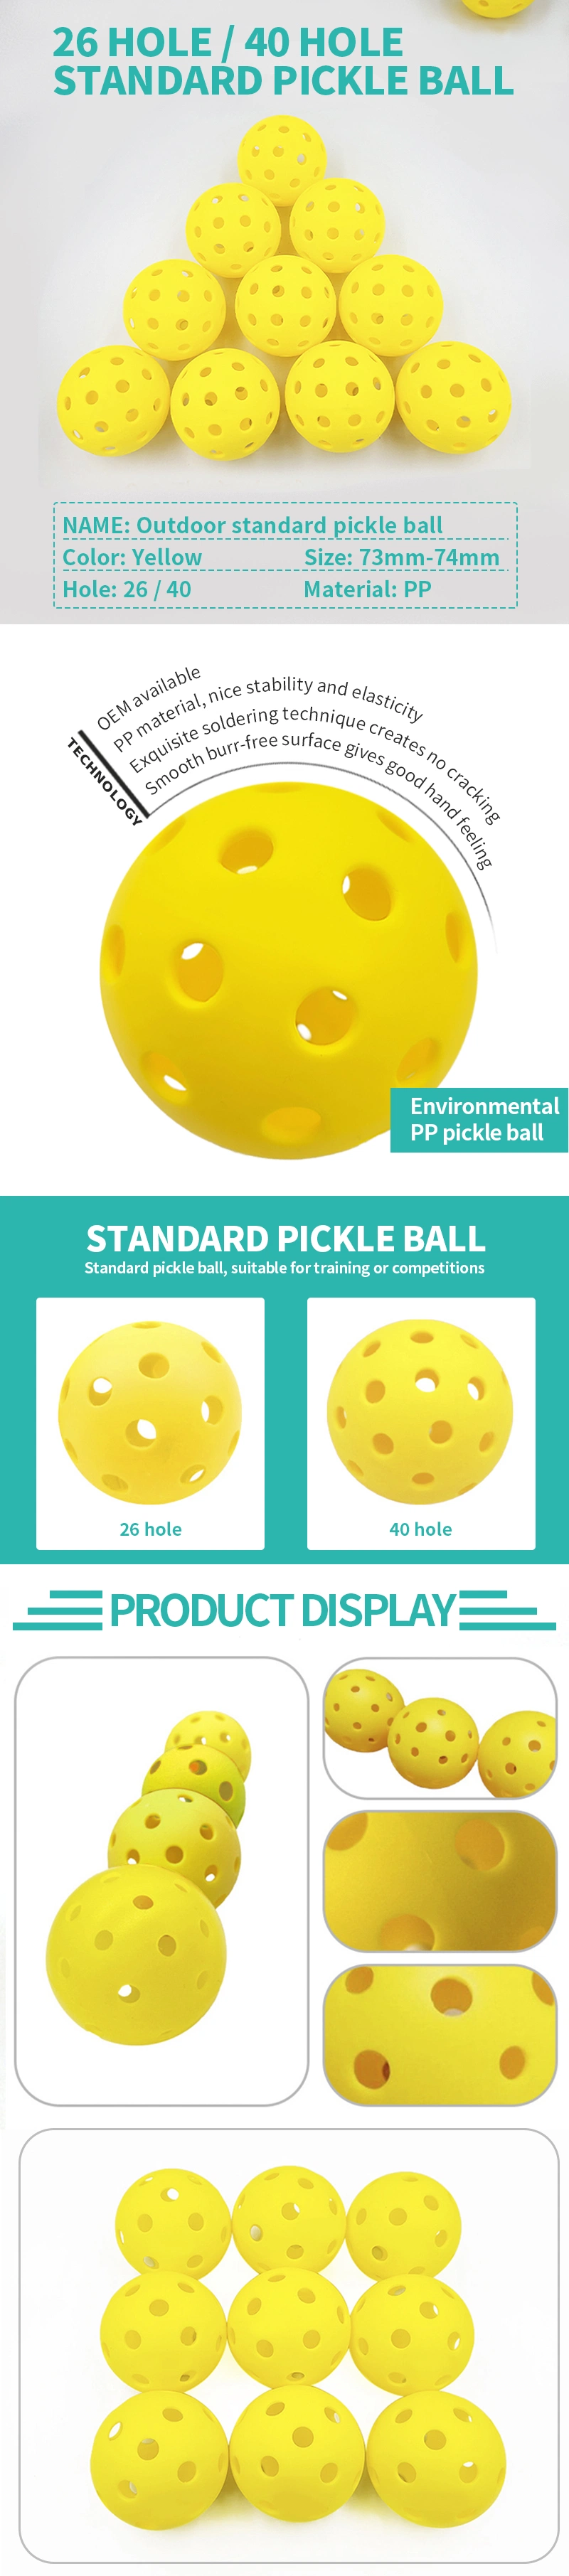 26 Holes Sports Pickleballs Pickleball New Pickle Balls Hig Quality